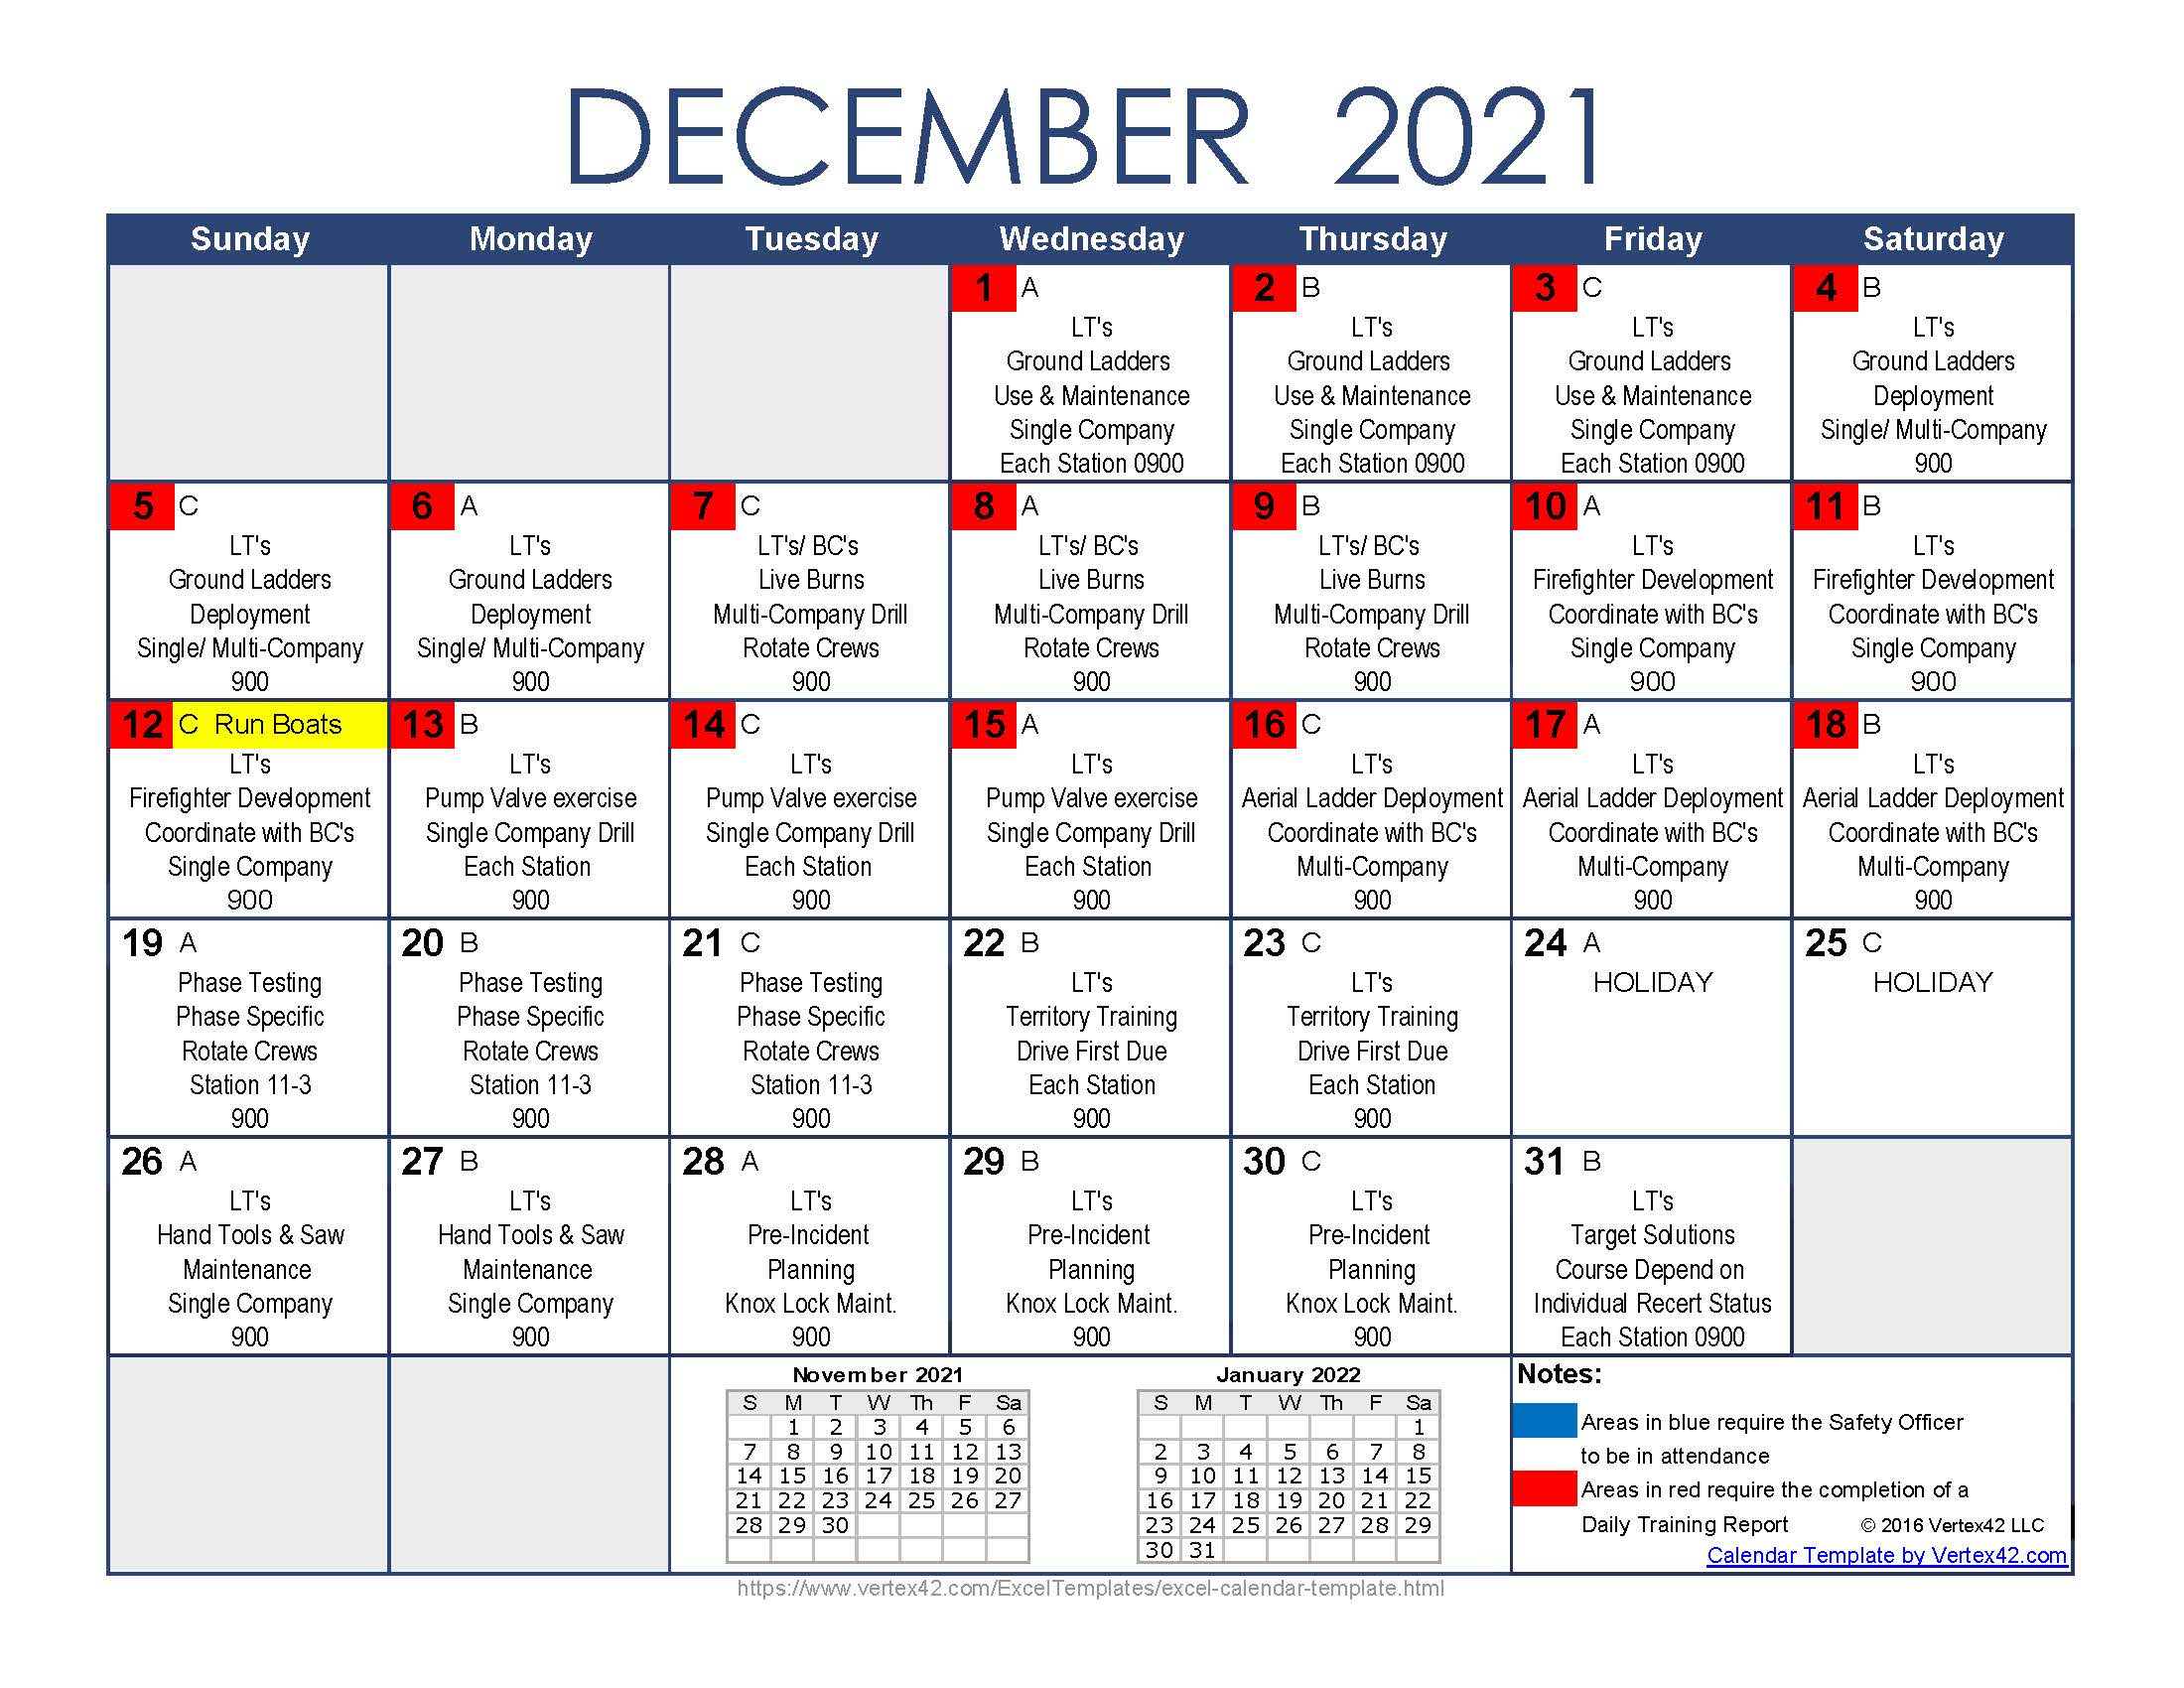 December Training Calendar